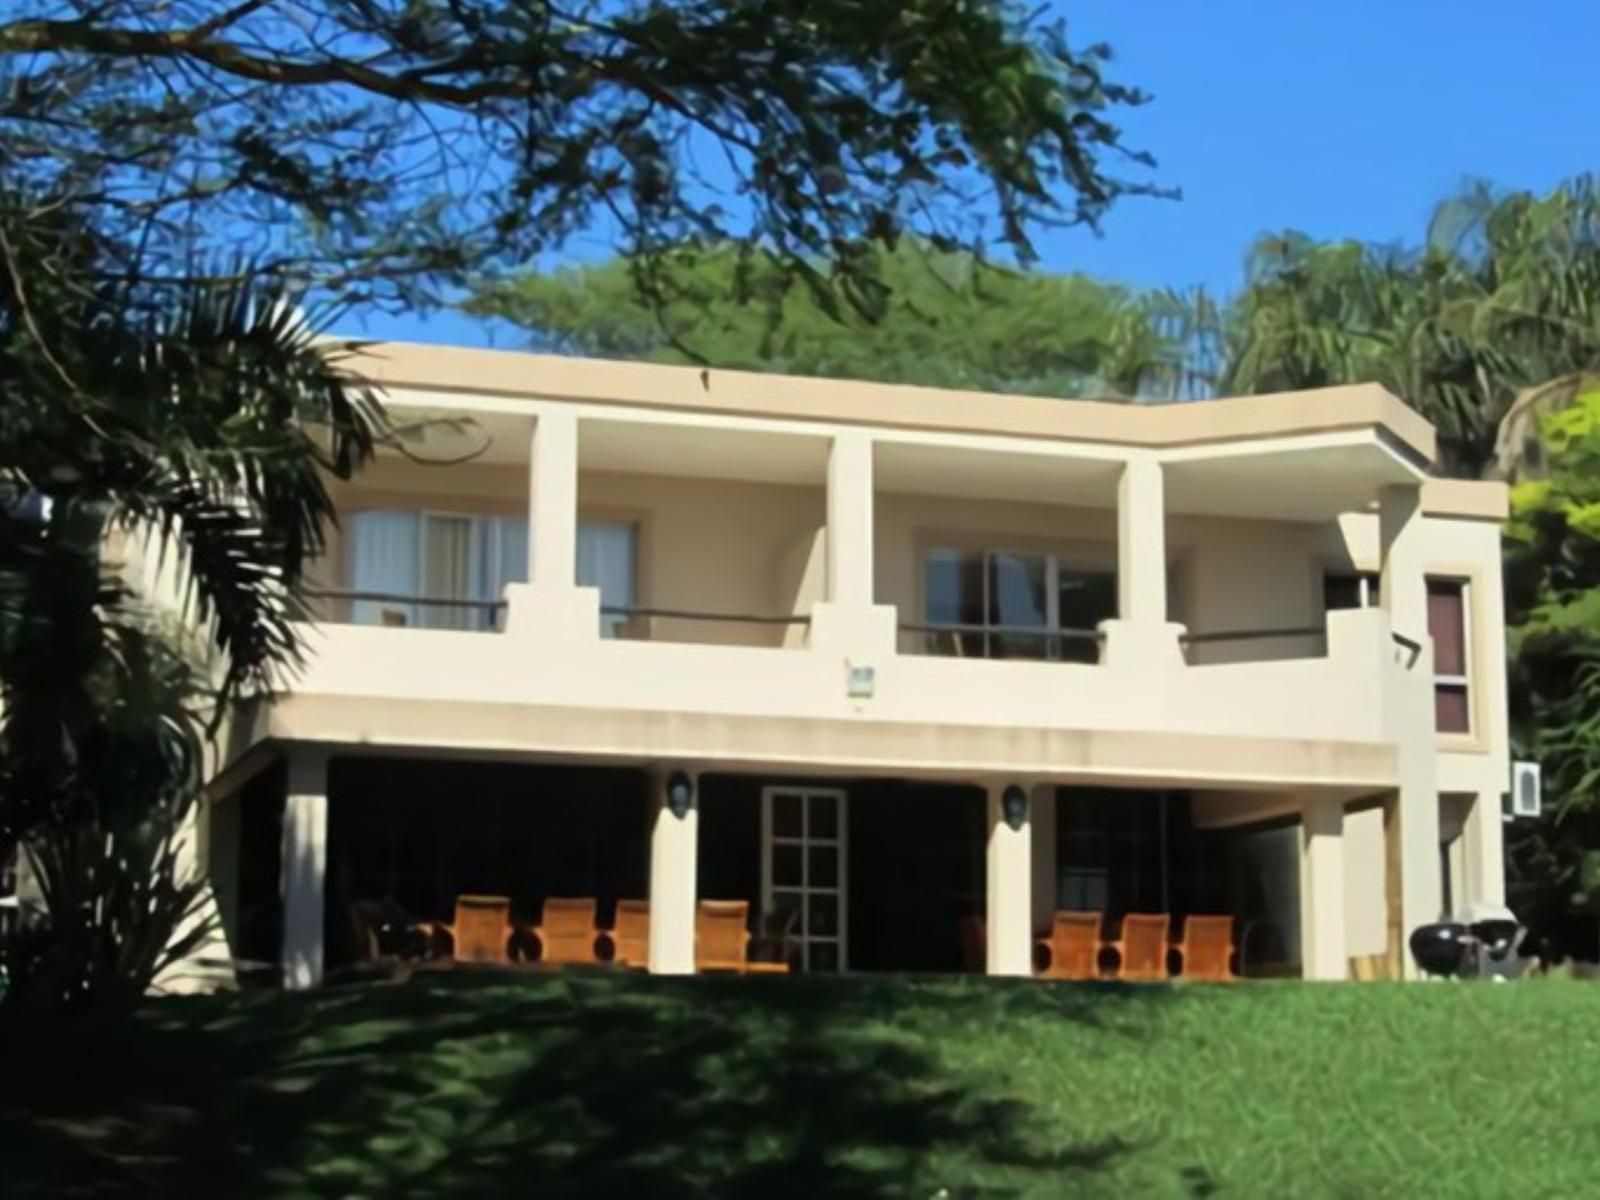 Eden River Lodge Scottburgh Kwazulu Natal South Africa House, Building, Architecture, Palm Tree, Plant, Nature, Wood